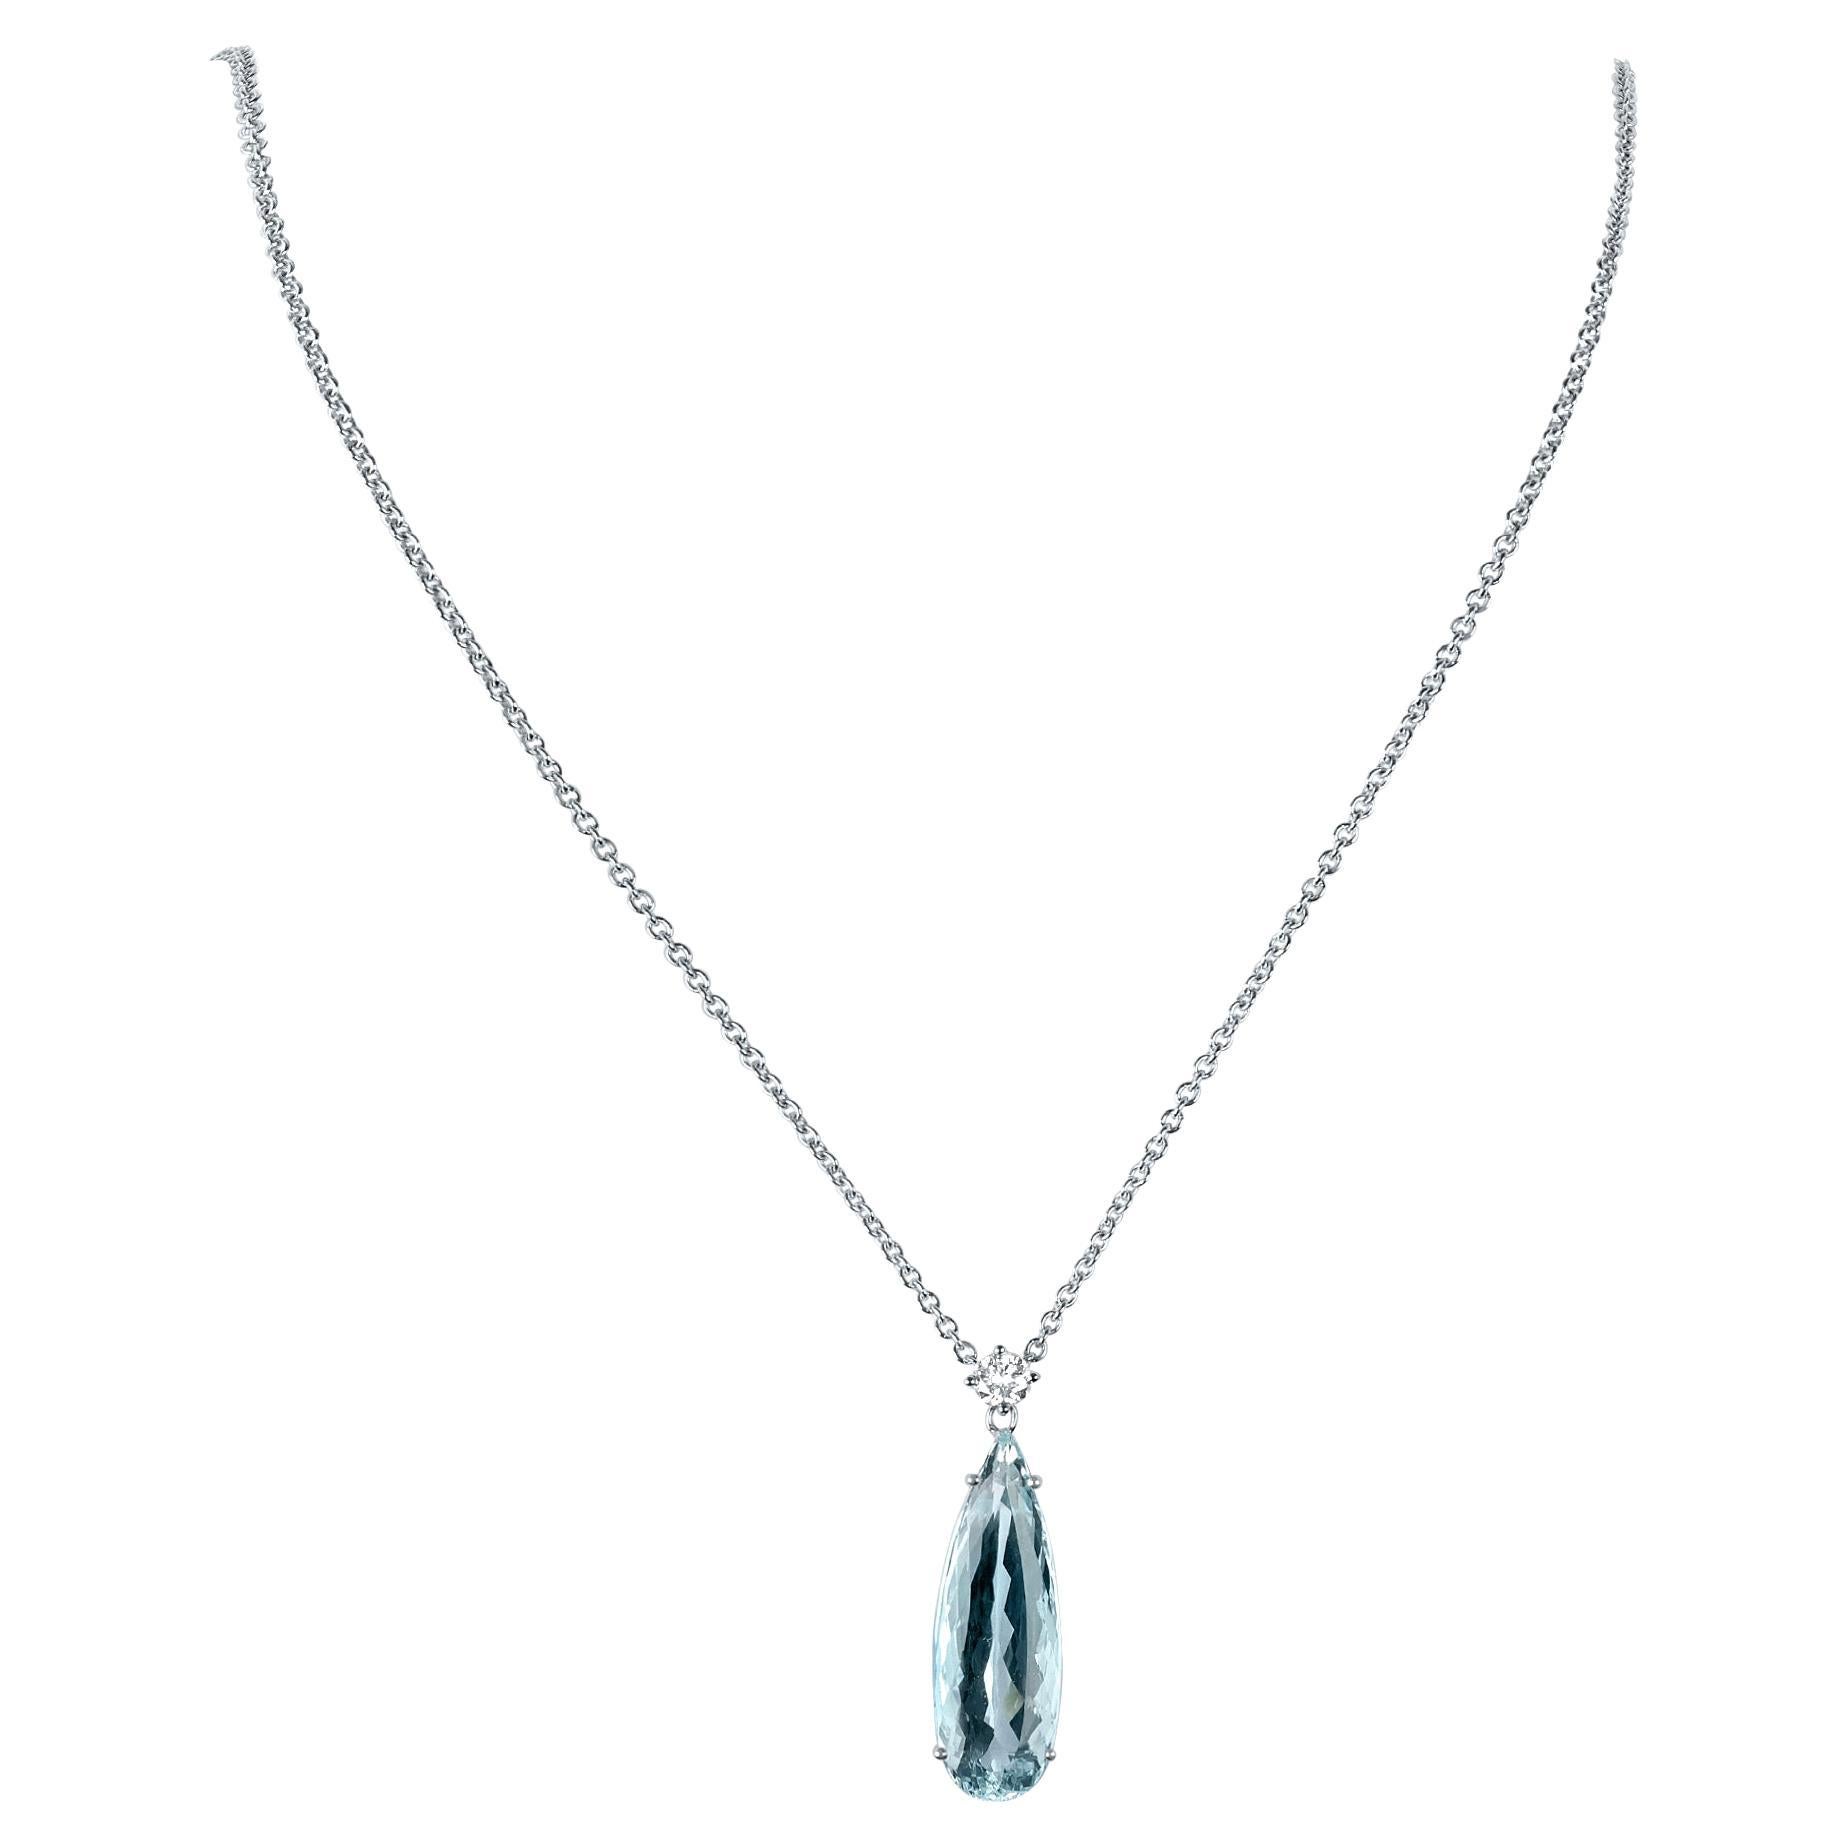 13.74 Carat Aquamarine Drop Necklace For Sale